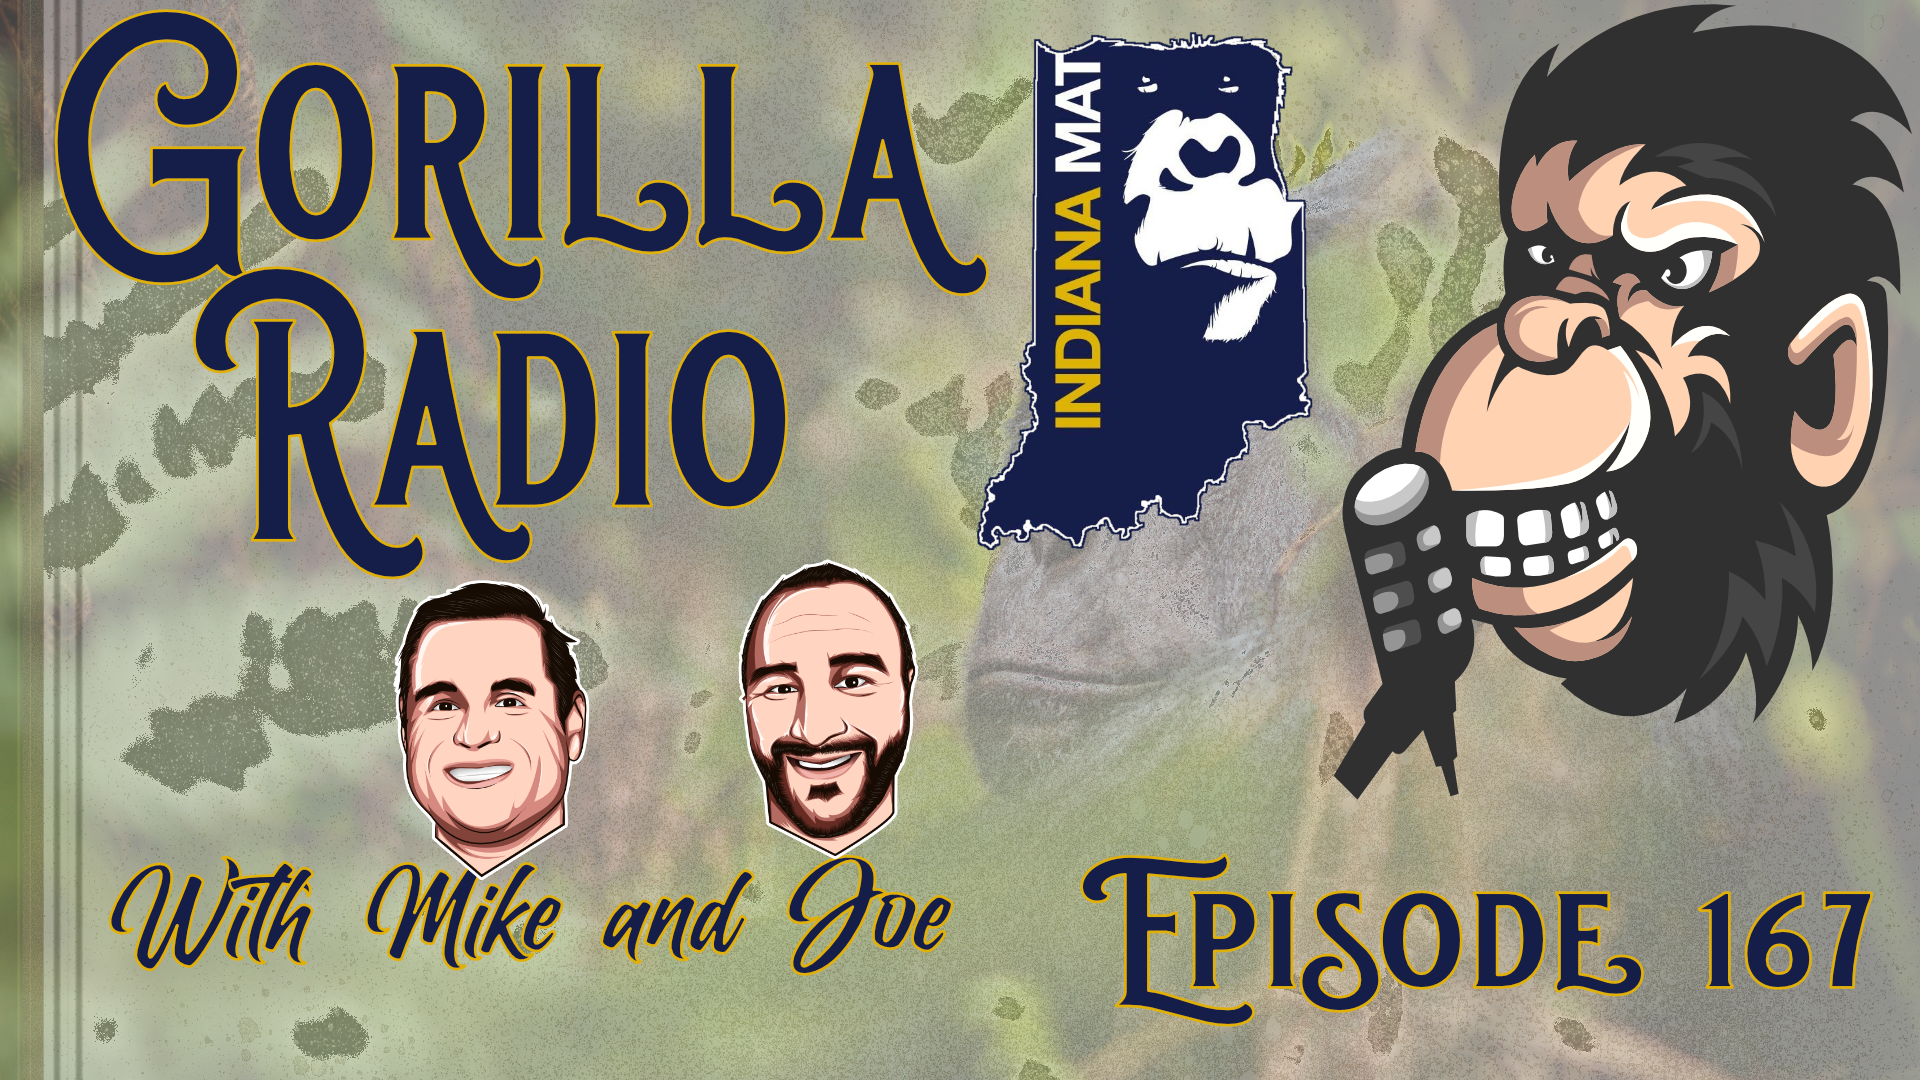 More information about "IndianaMat Gorilla Radio Episode 167"